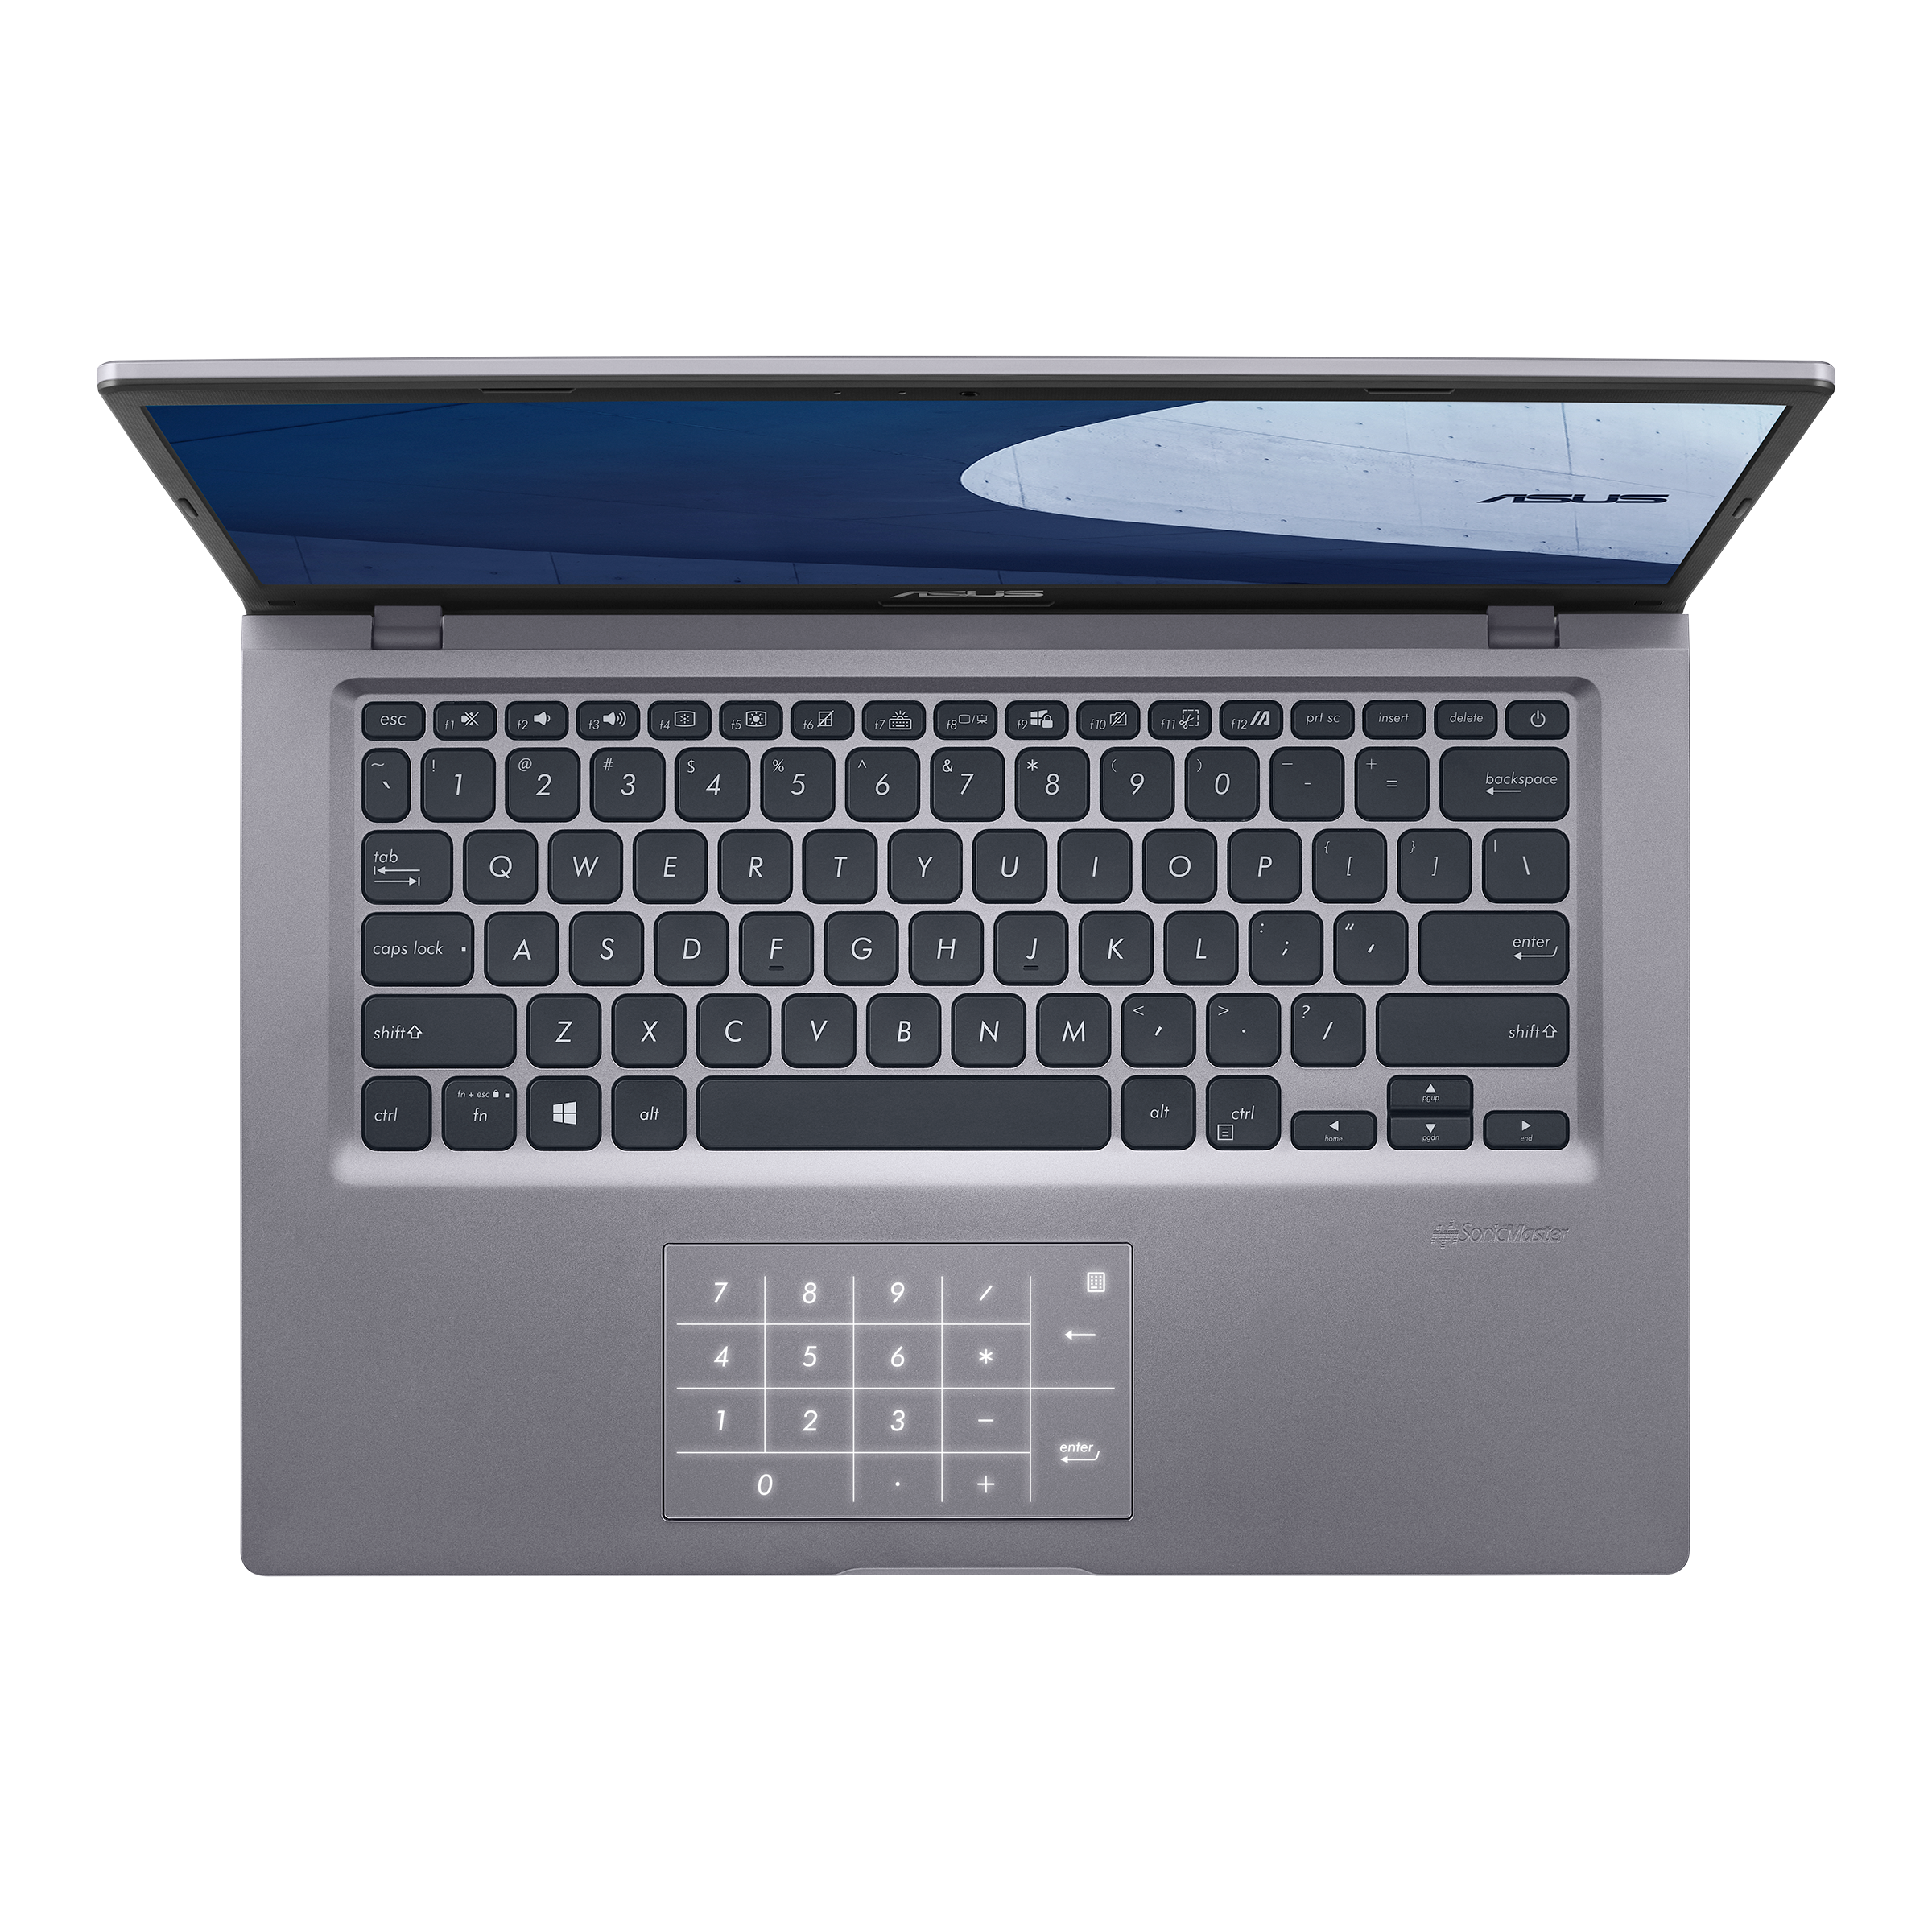 Asus Laptop P1412 P1412CEA-EK0619X